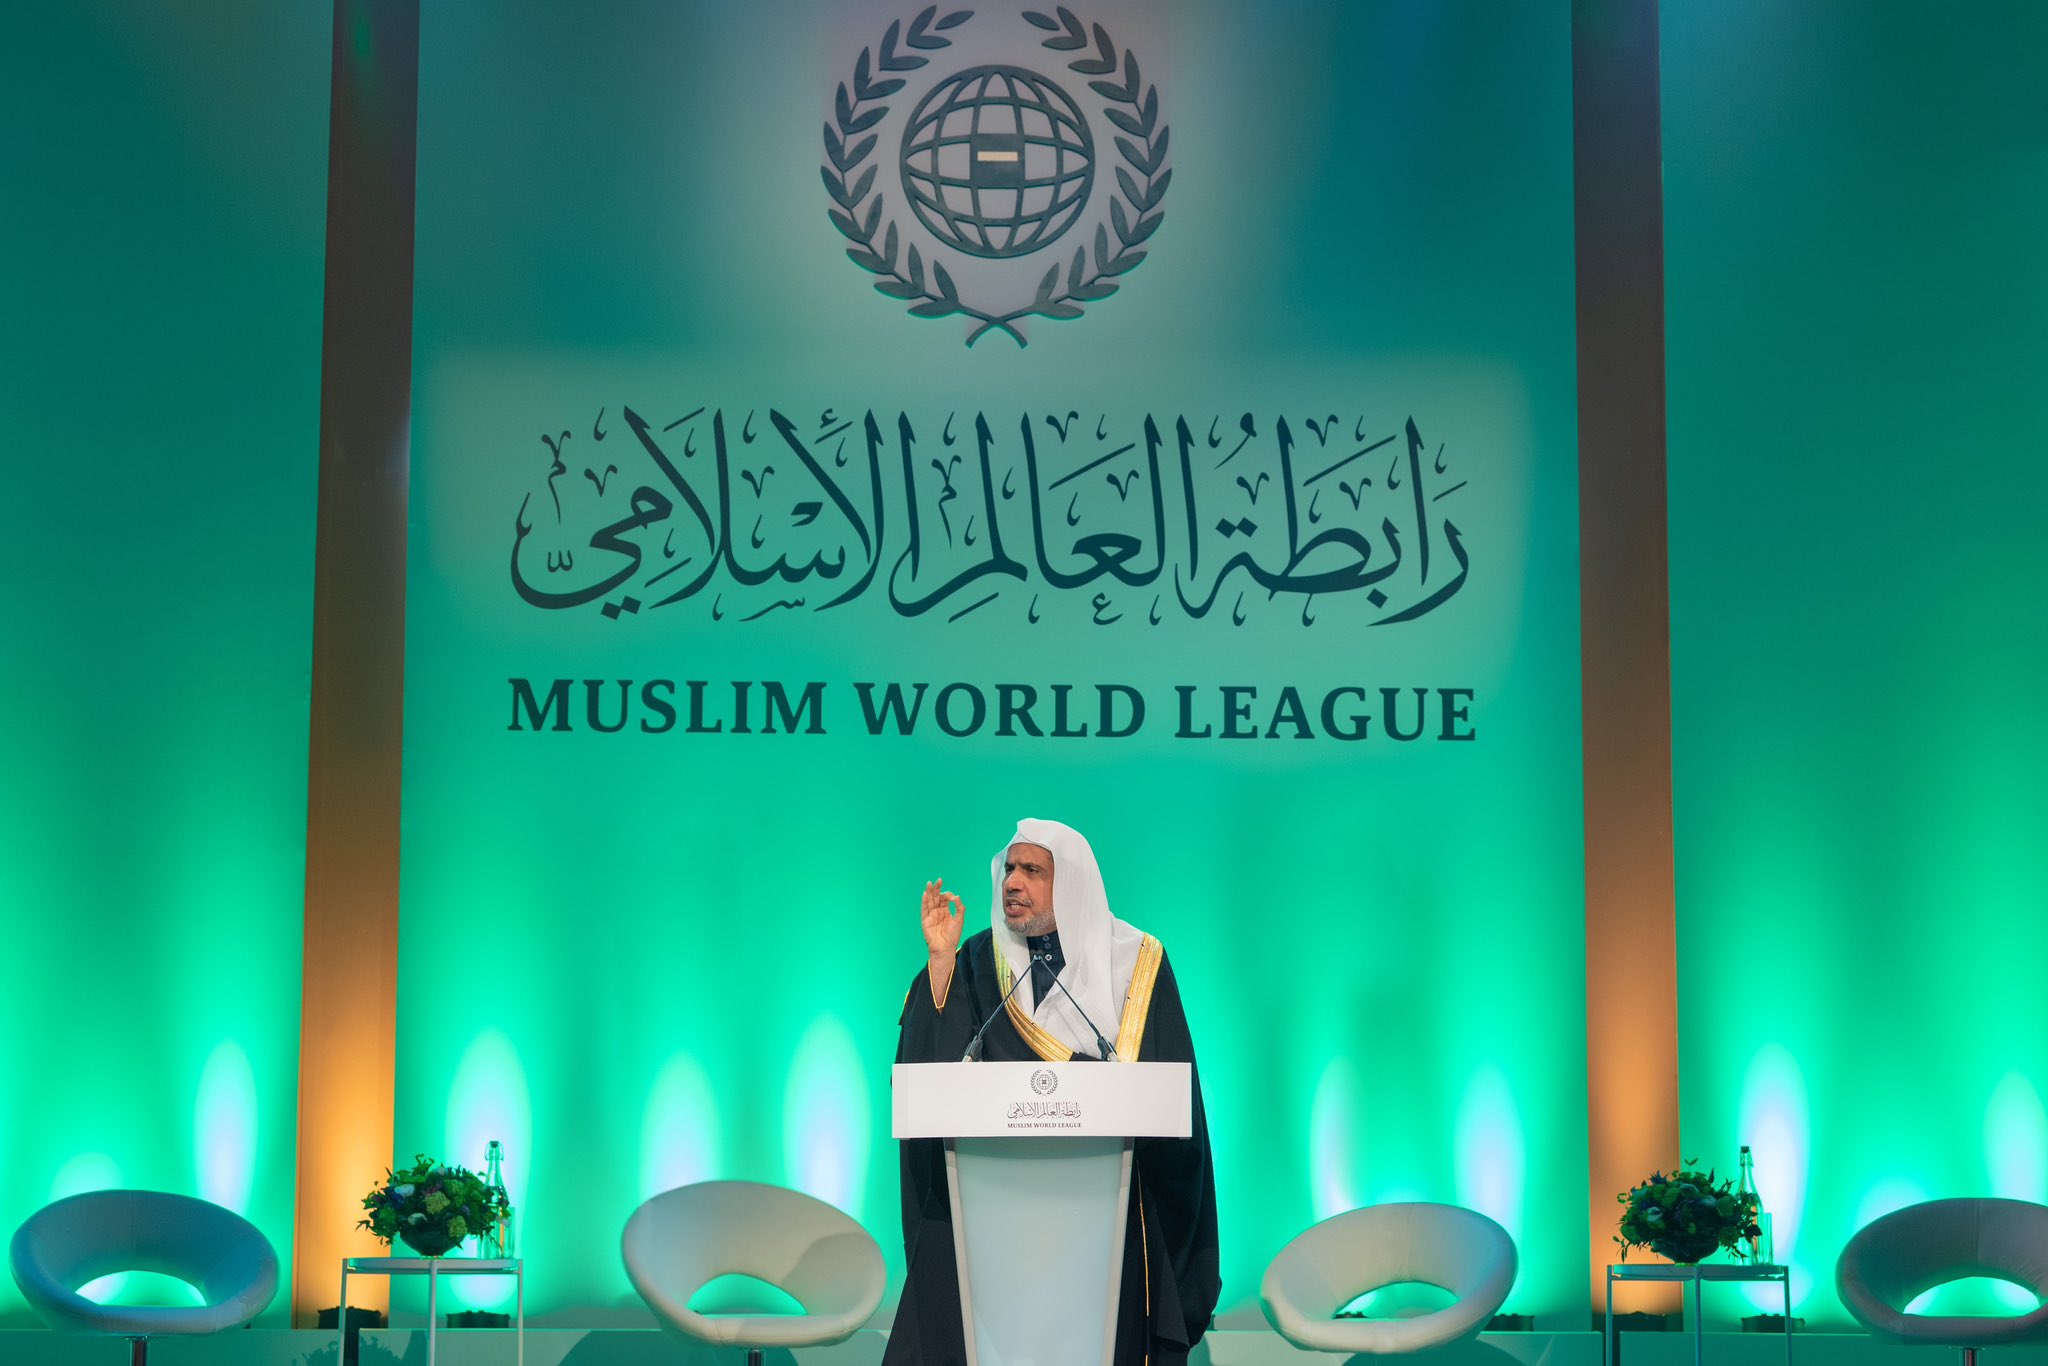 Sekjen LMD, Ketua Asosiasi Ulama Muslim, Dr.Mhmd Alissa meresmikan: